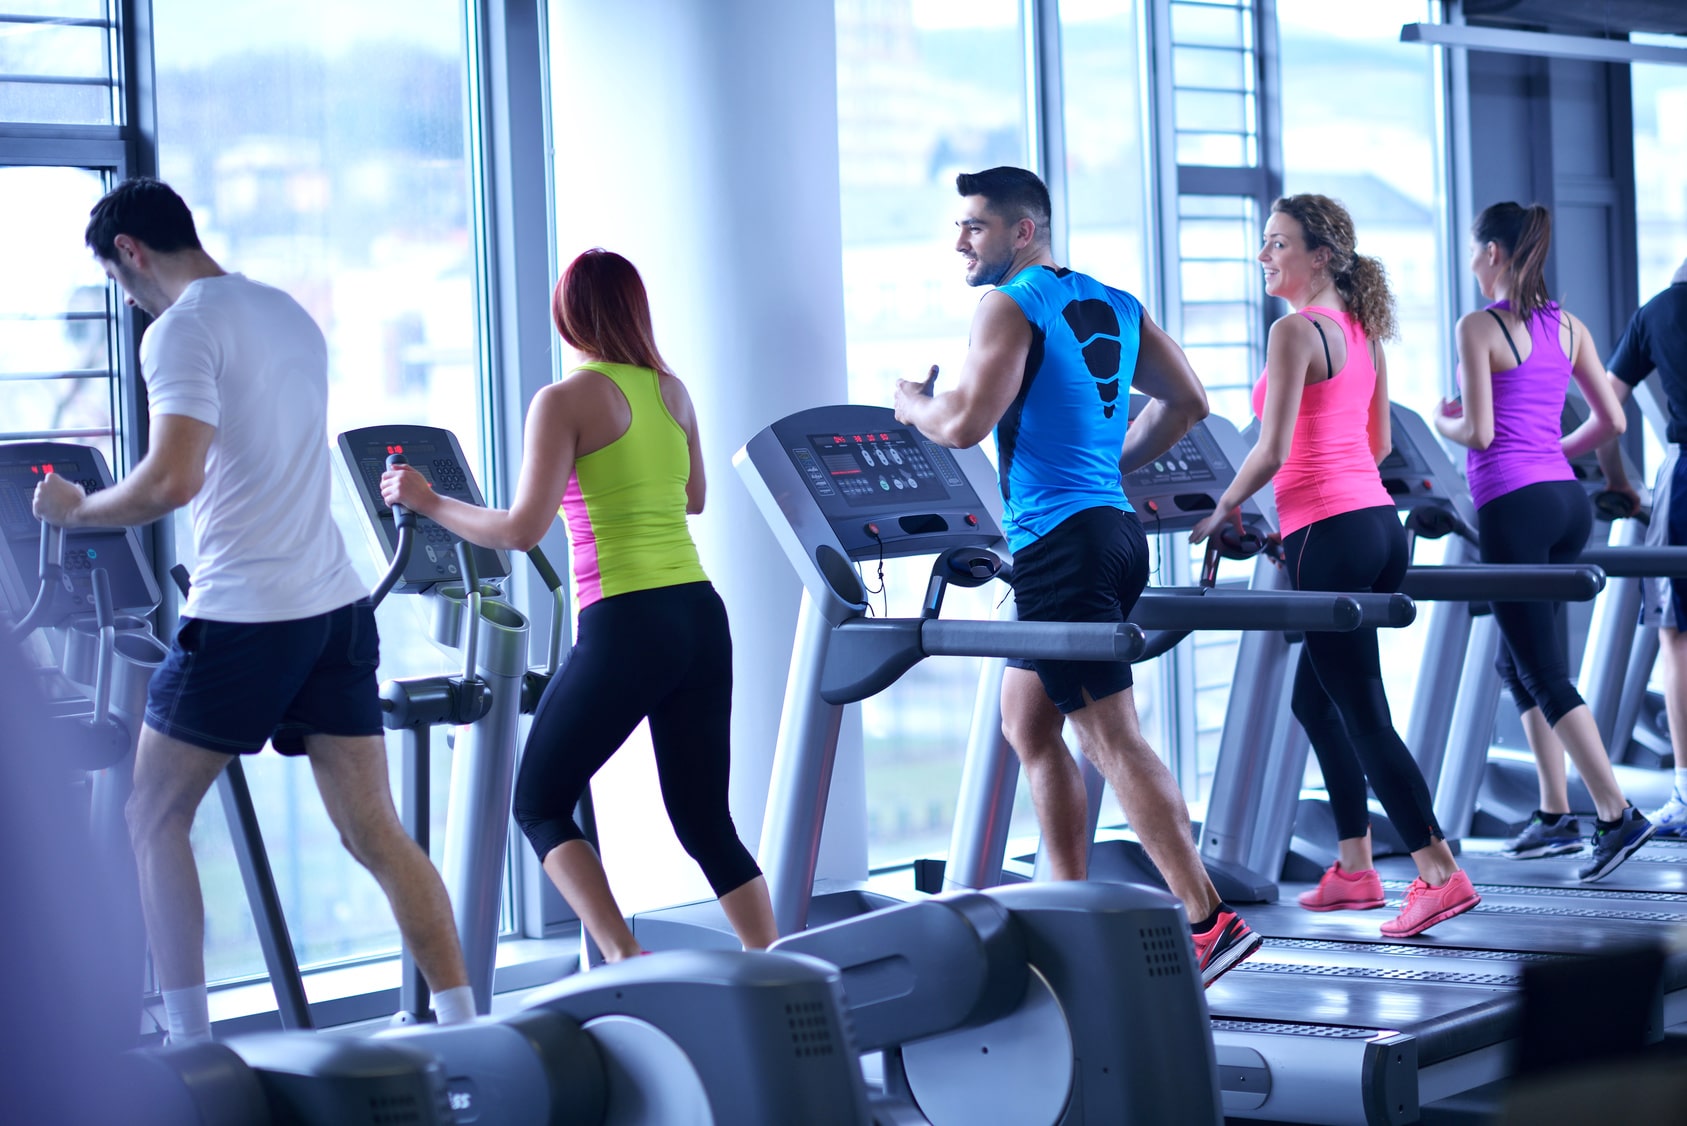 runners training on a treadmill